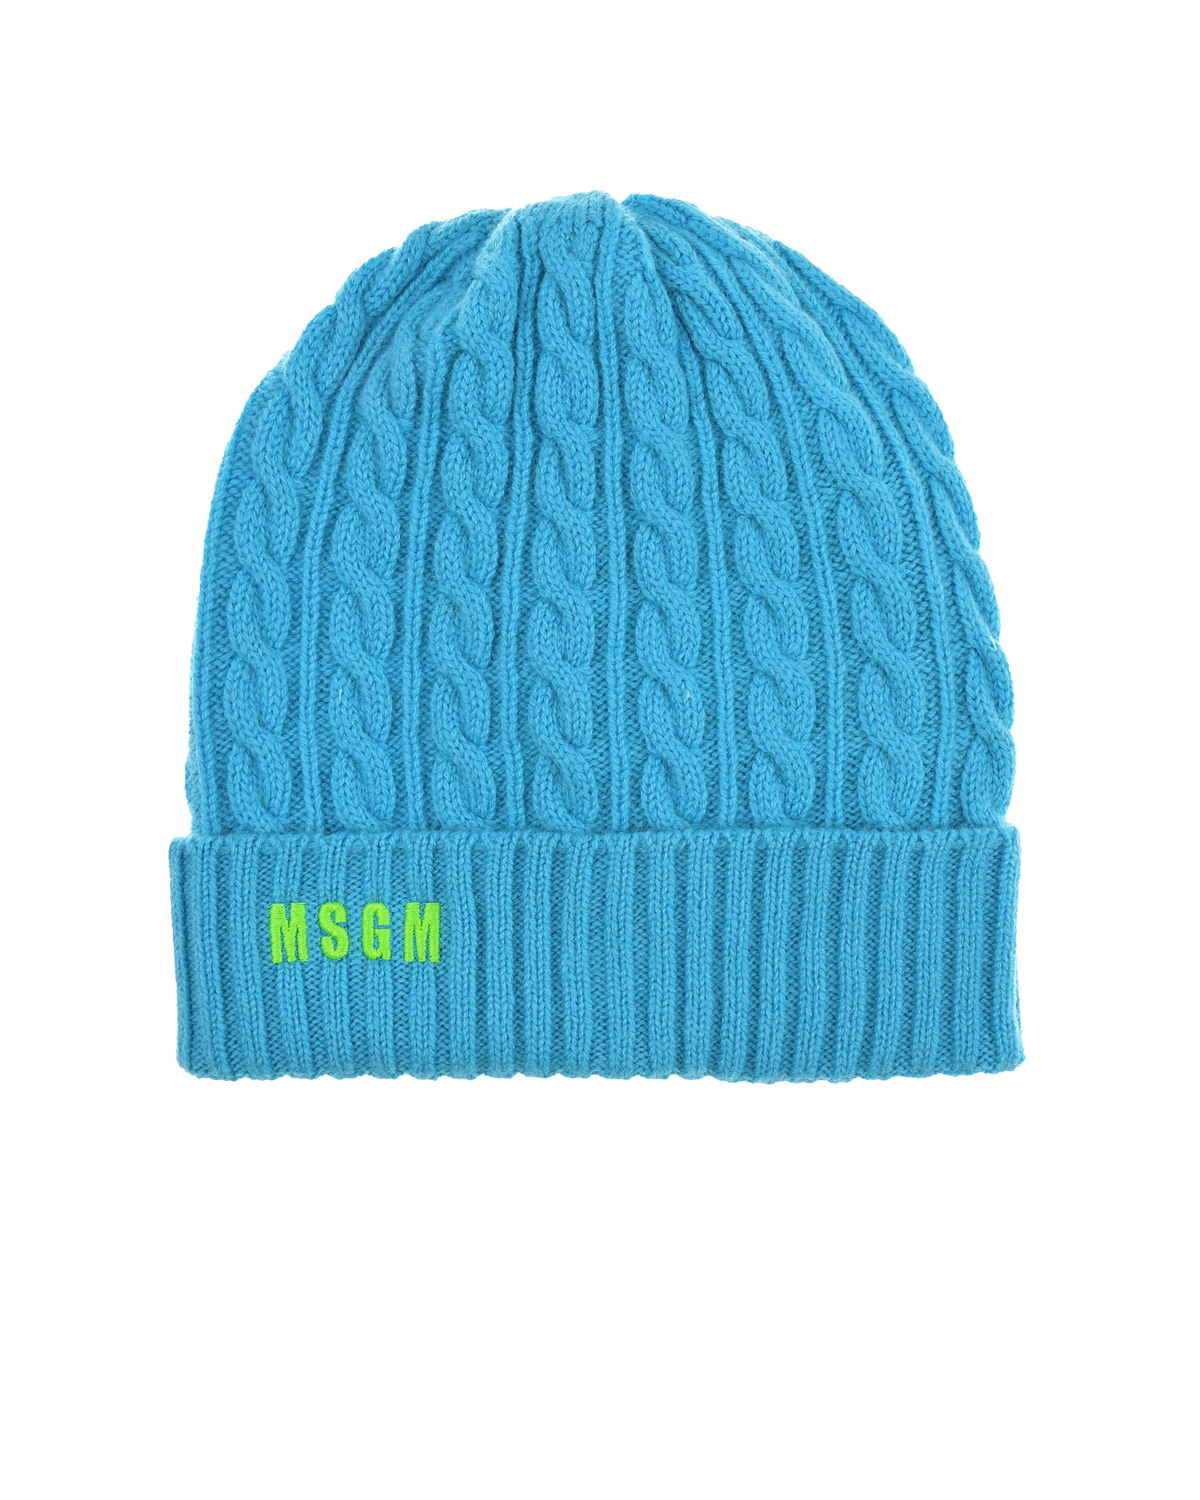 Голубая шапка из шерсти и кашемира MSGM, размер unica, цвет голубой